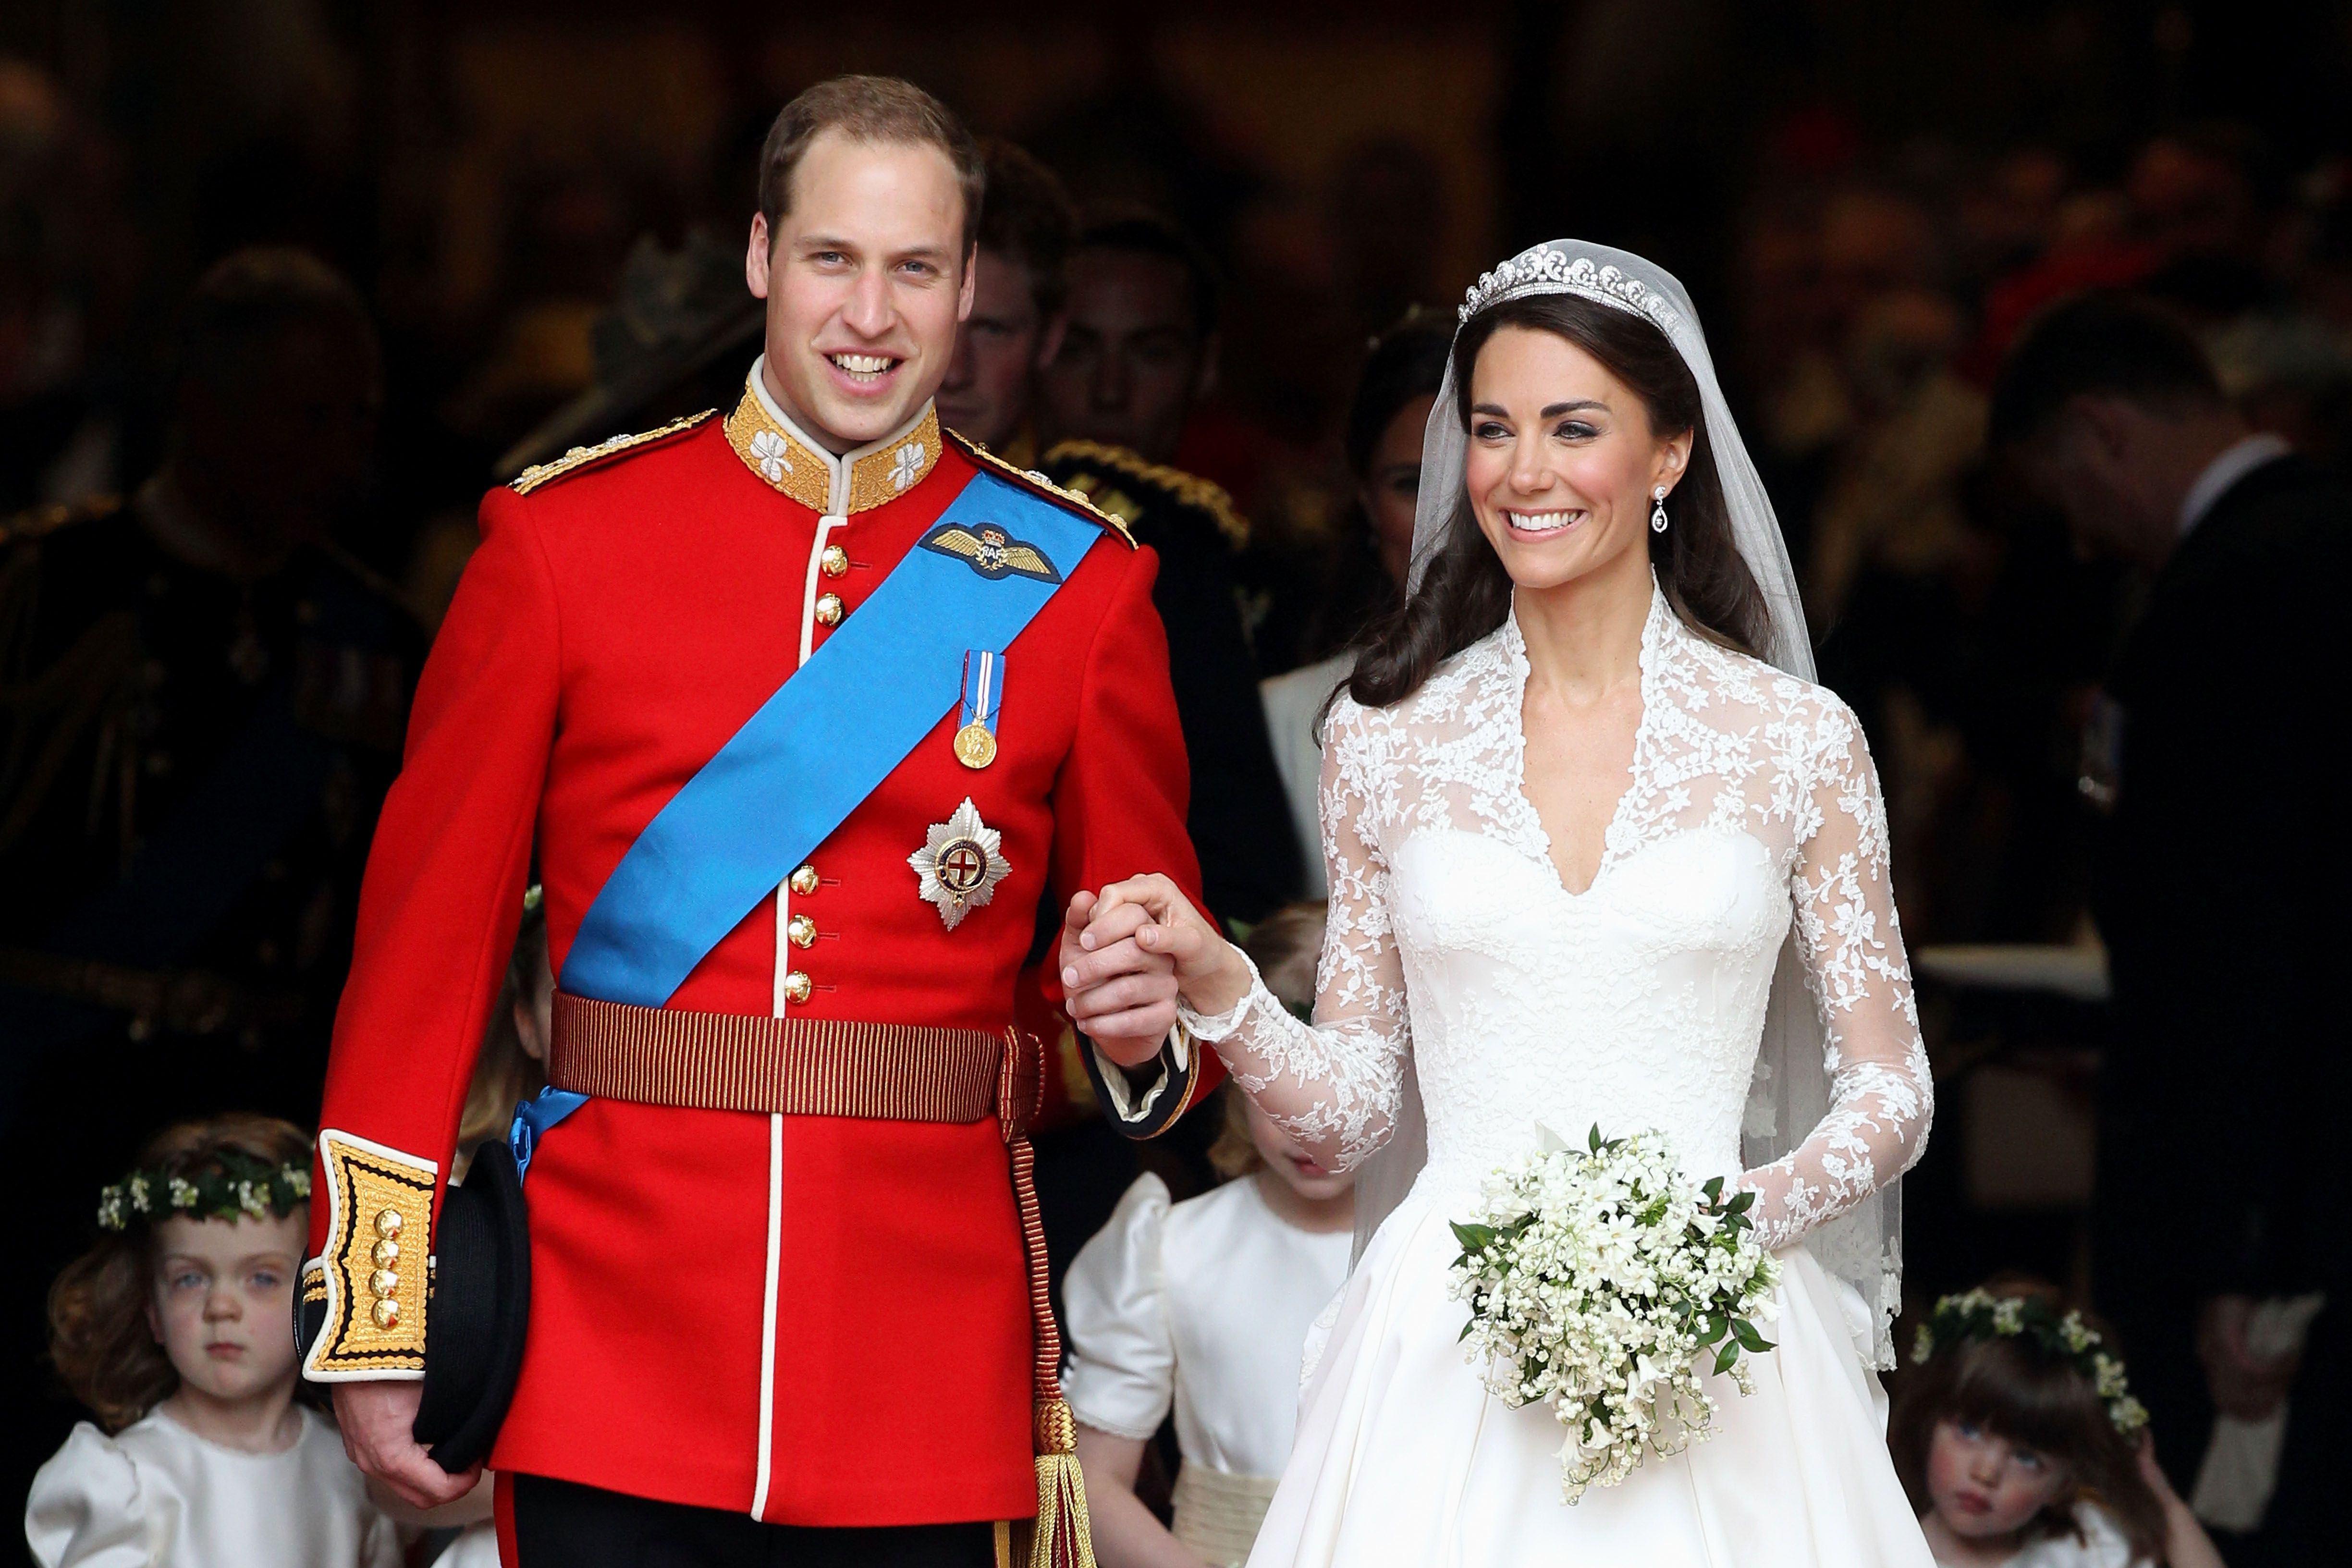 Image of the royal wedding around the world